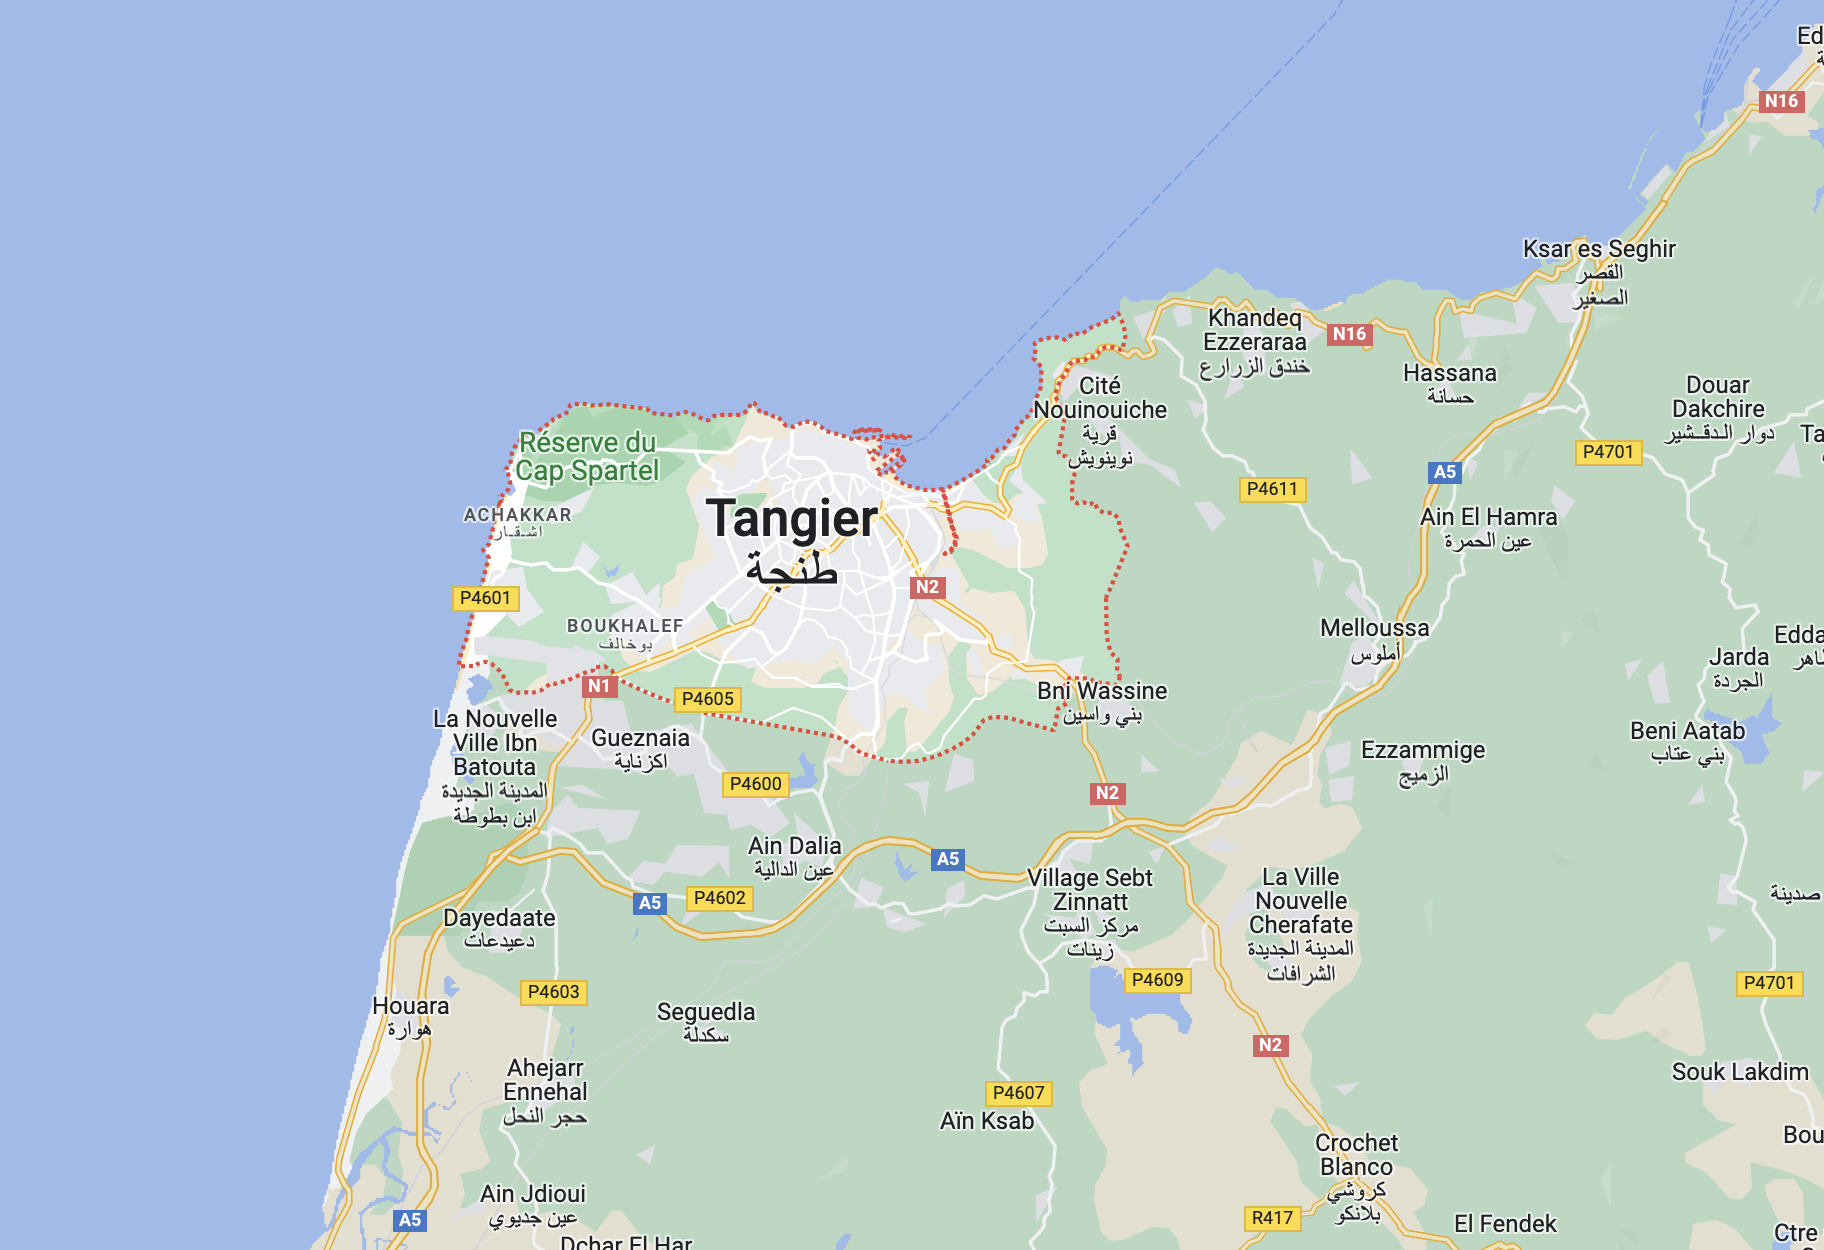 Tangiers, Tanger-Tetouan-Al Hoceima Region, Morocco